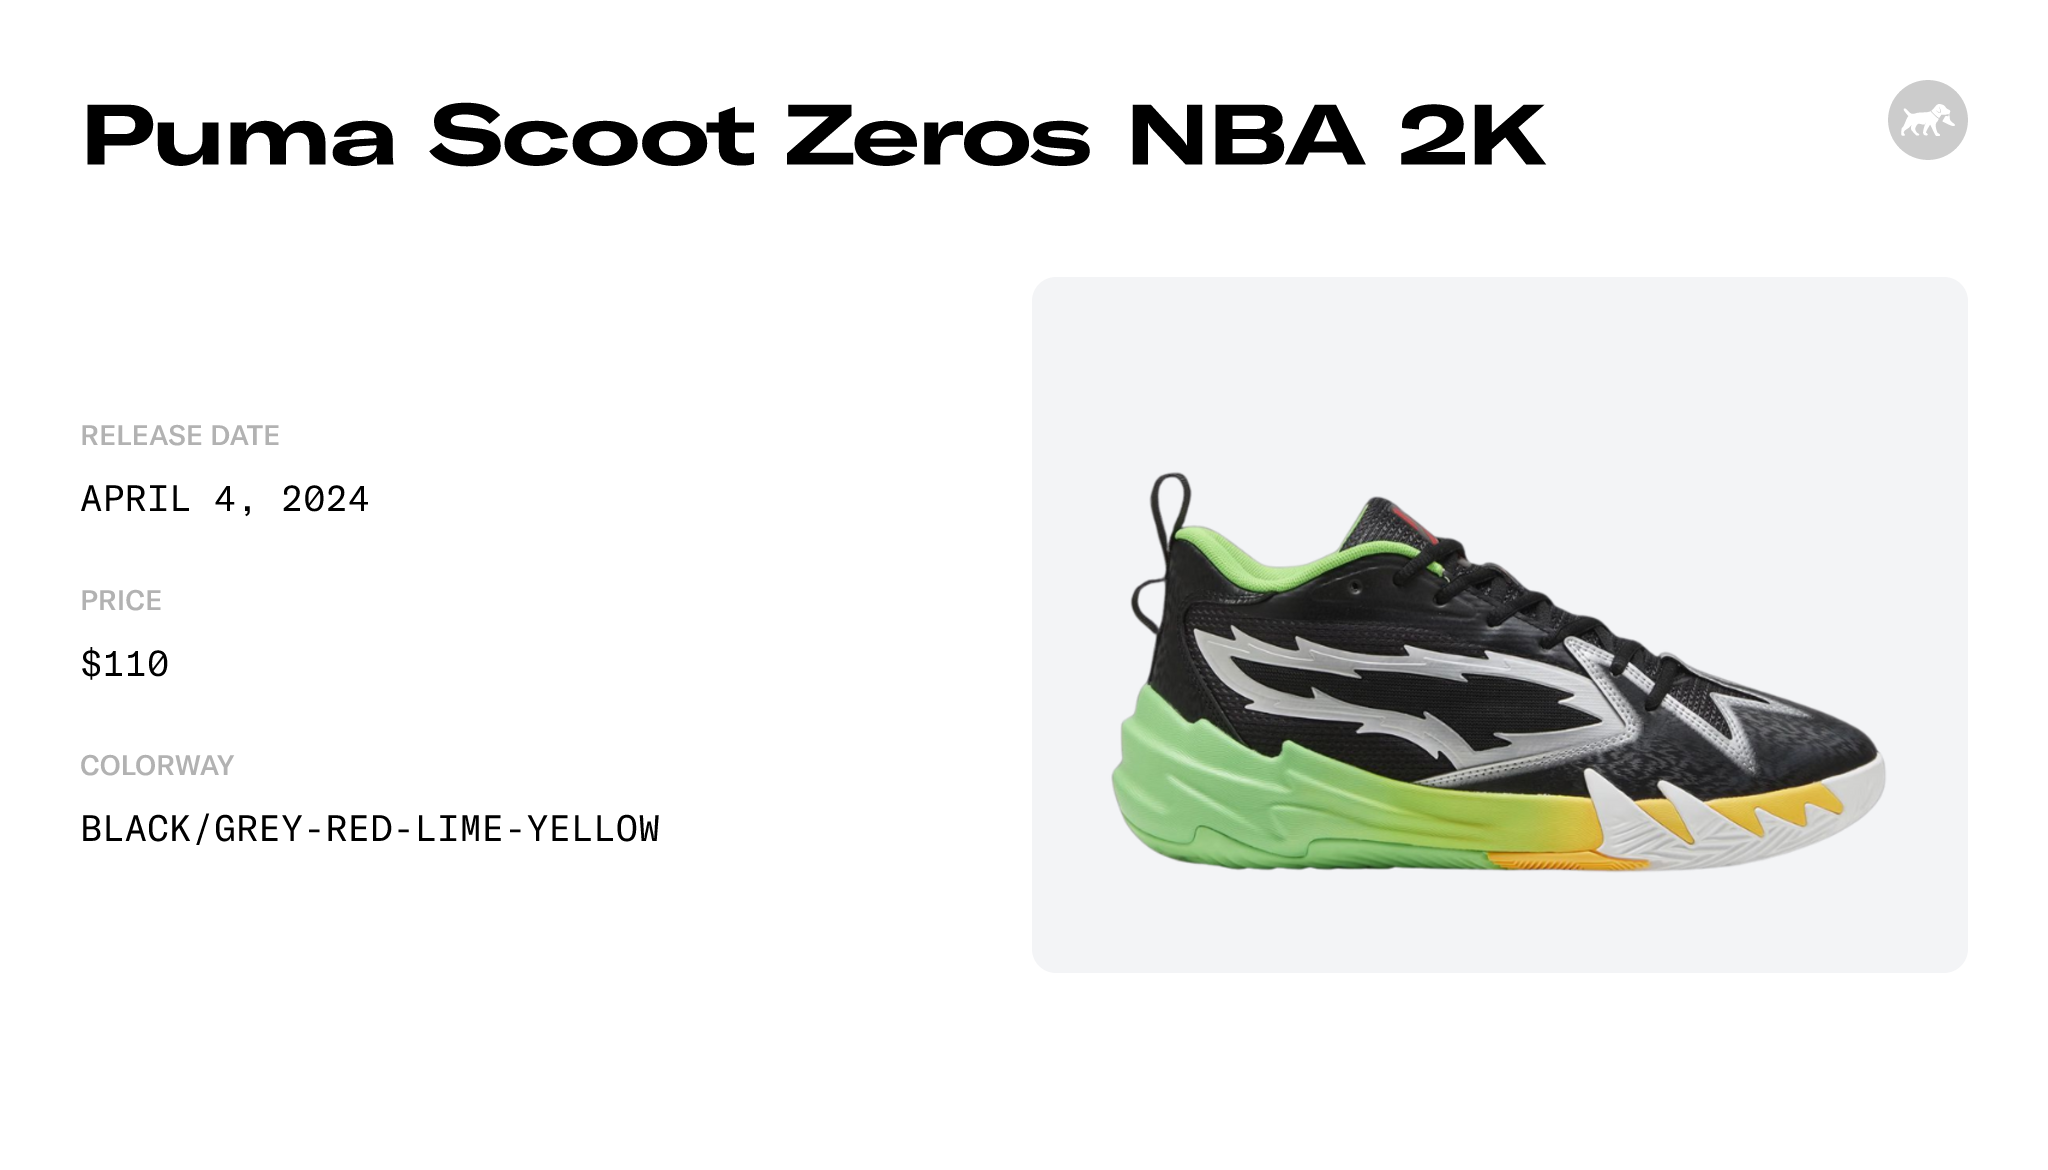 Puma Scoot Zeros NBA 2K - 309841-01 Raffles and Release Date